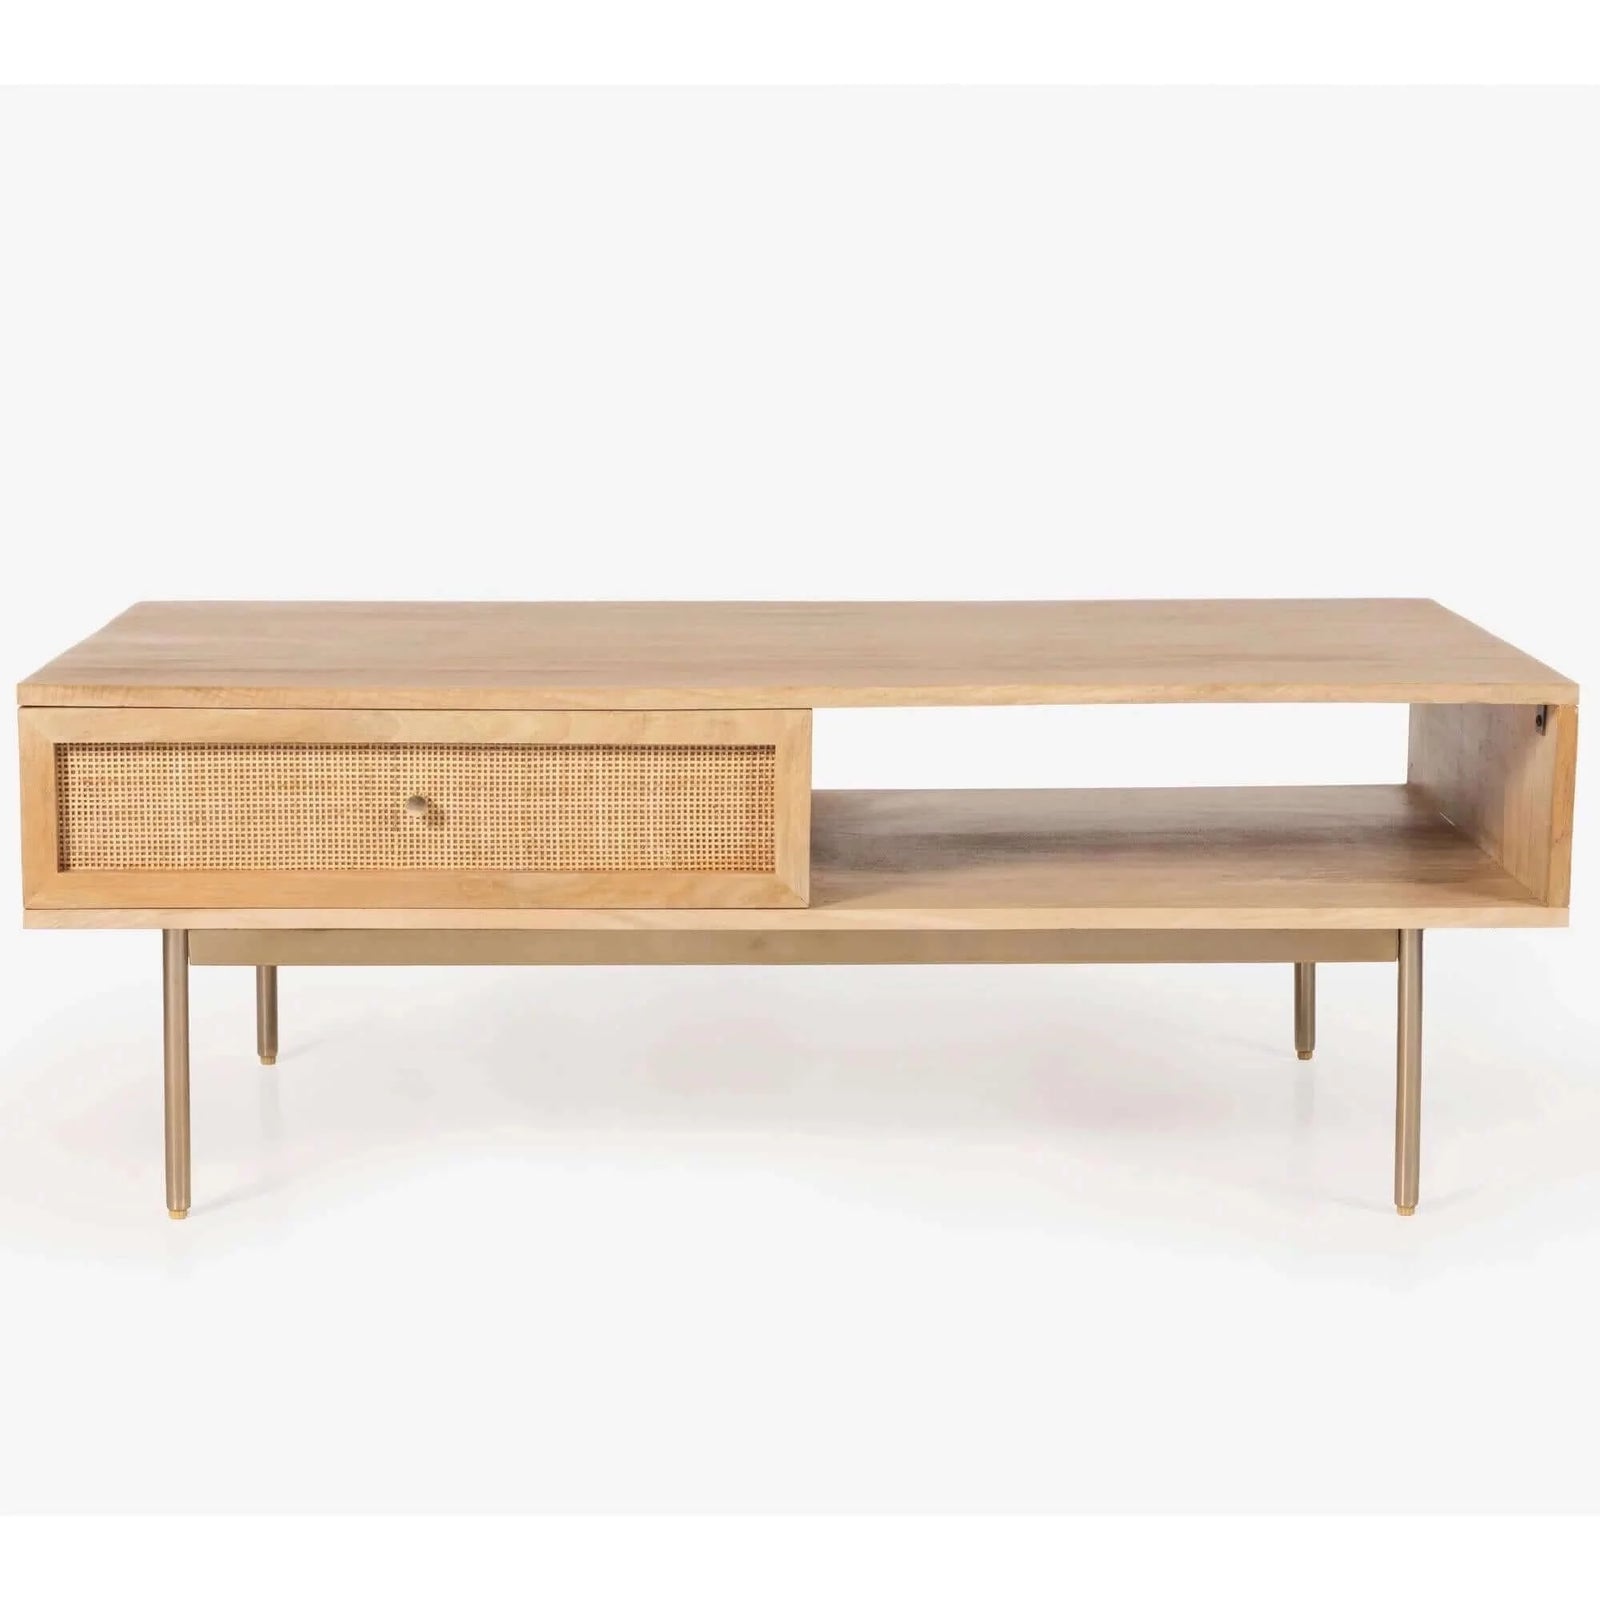 Buy Martina Coffee Table 115cm Solid Mango Timber Wood Rattan Furniture in Australia -Upinteriors